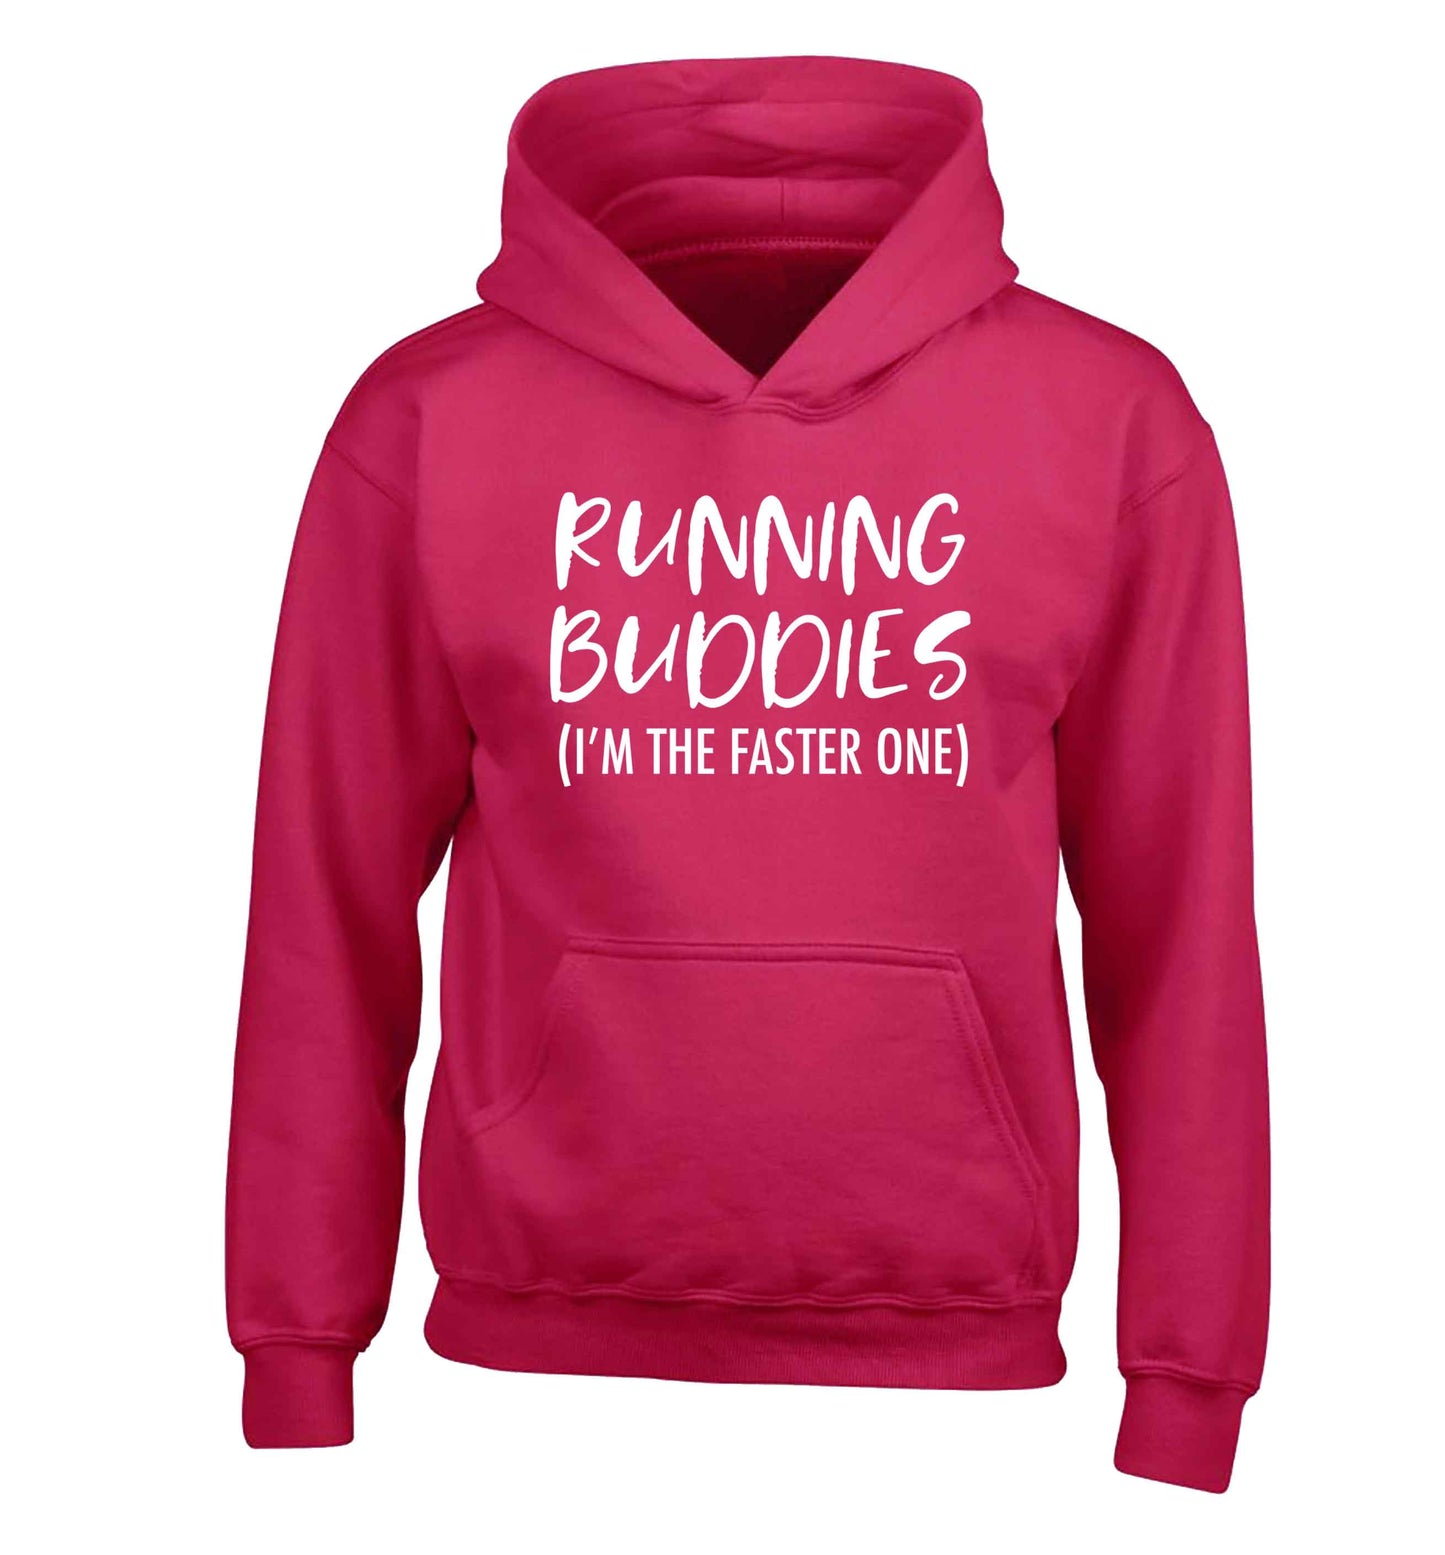 Running buddies (I'm the faster one) children's pink hoodie 12-13 Years